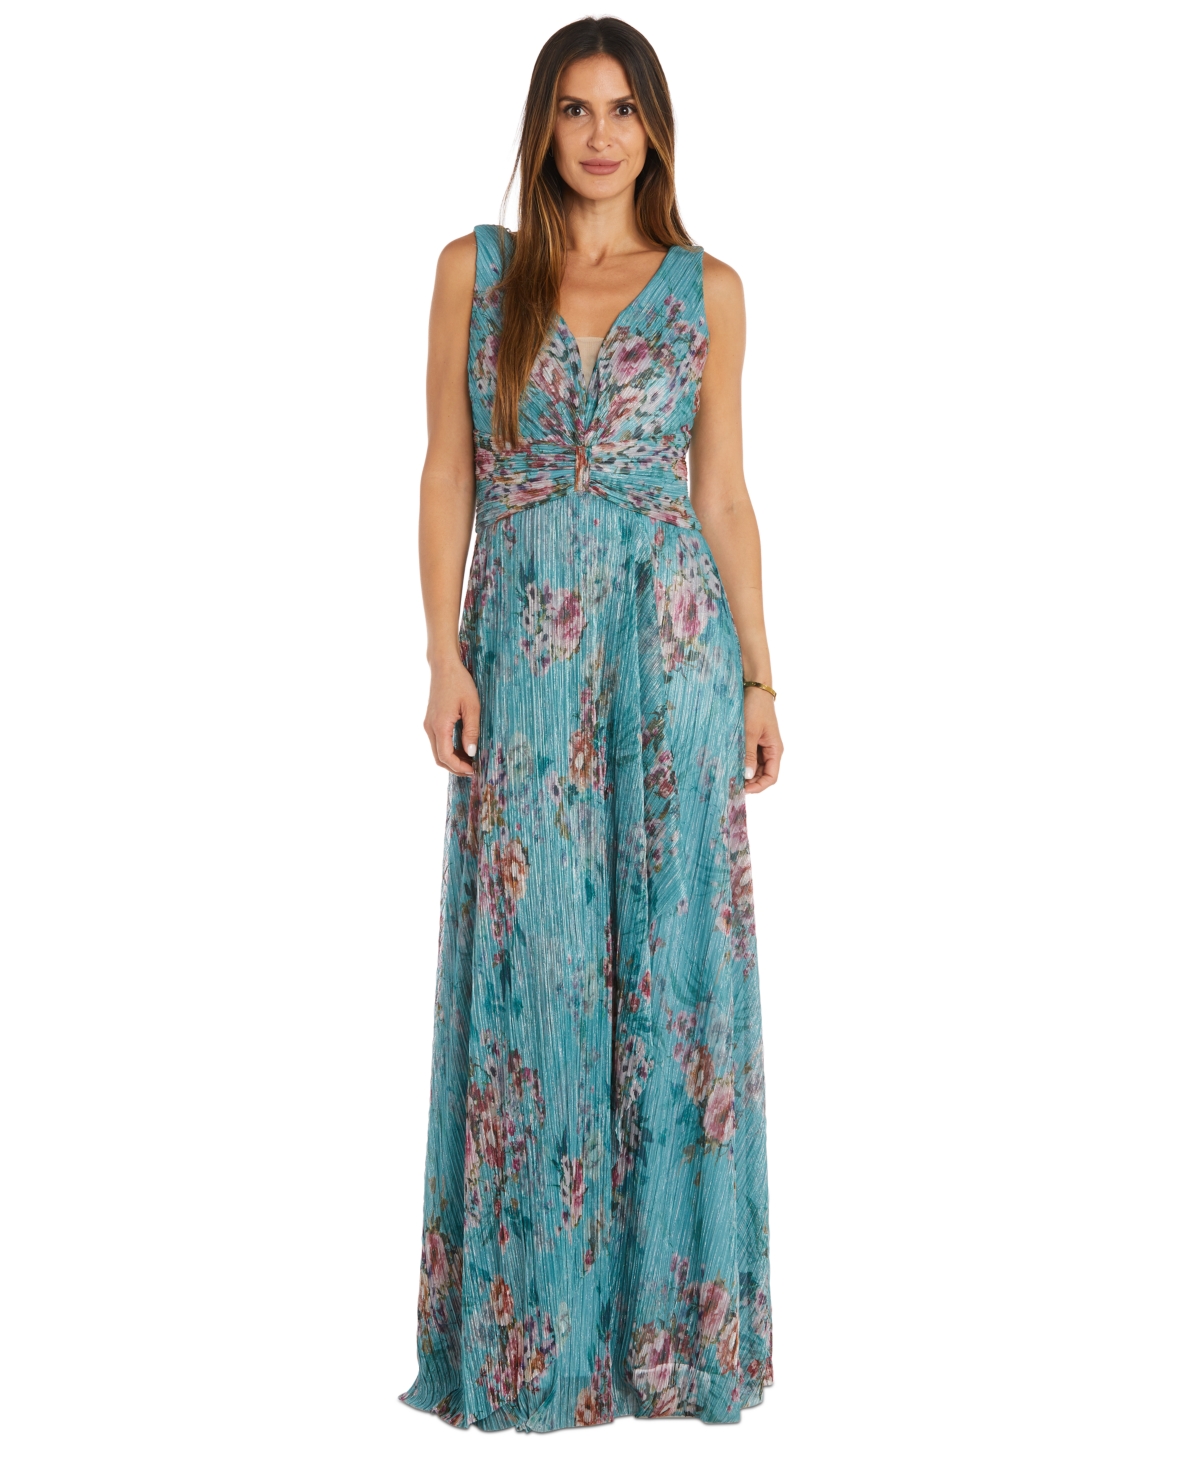 Women's Metallic Floral Print Sleeveless Gown - Turquoise